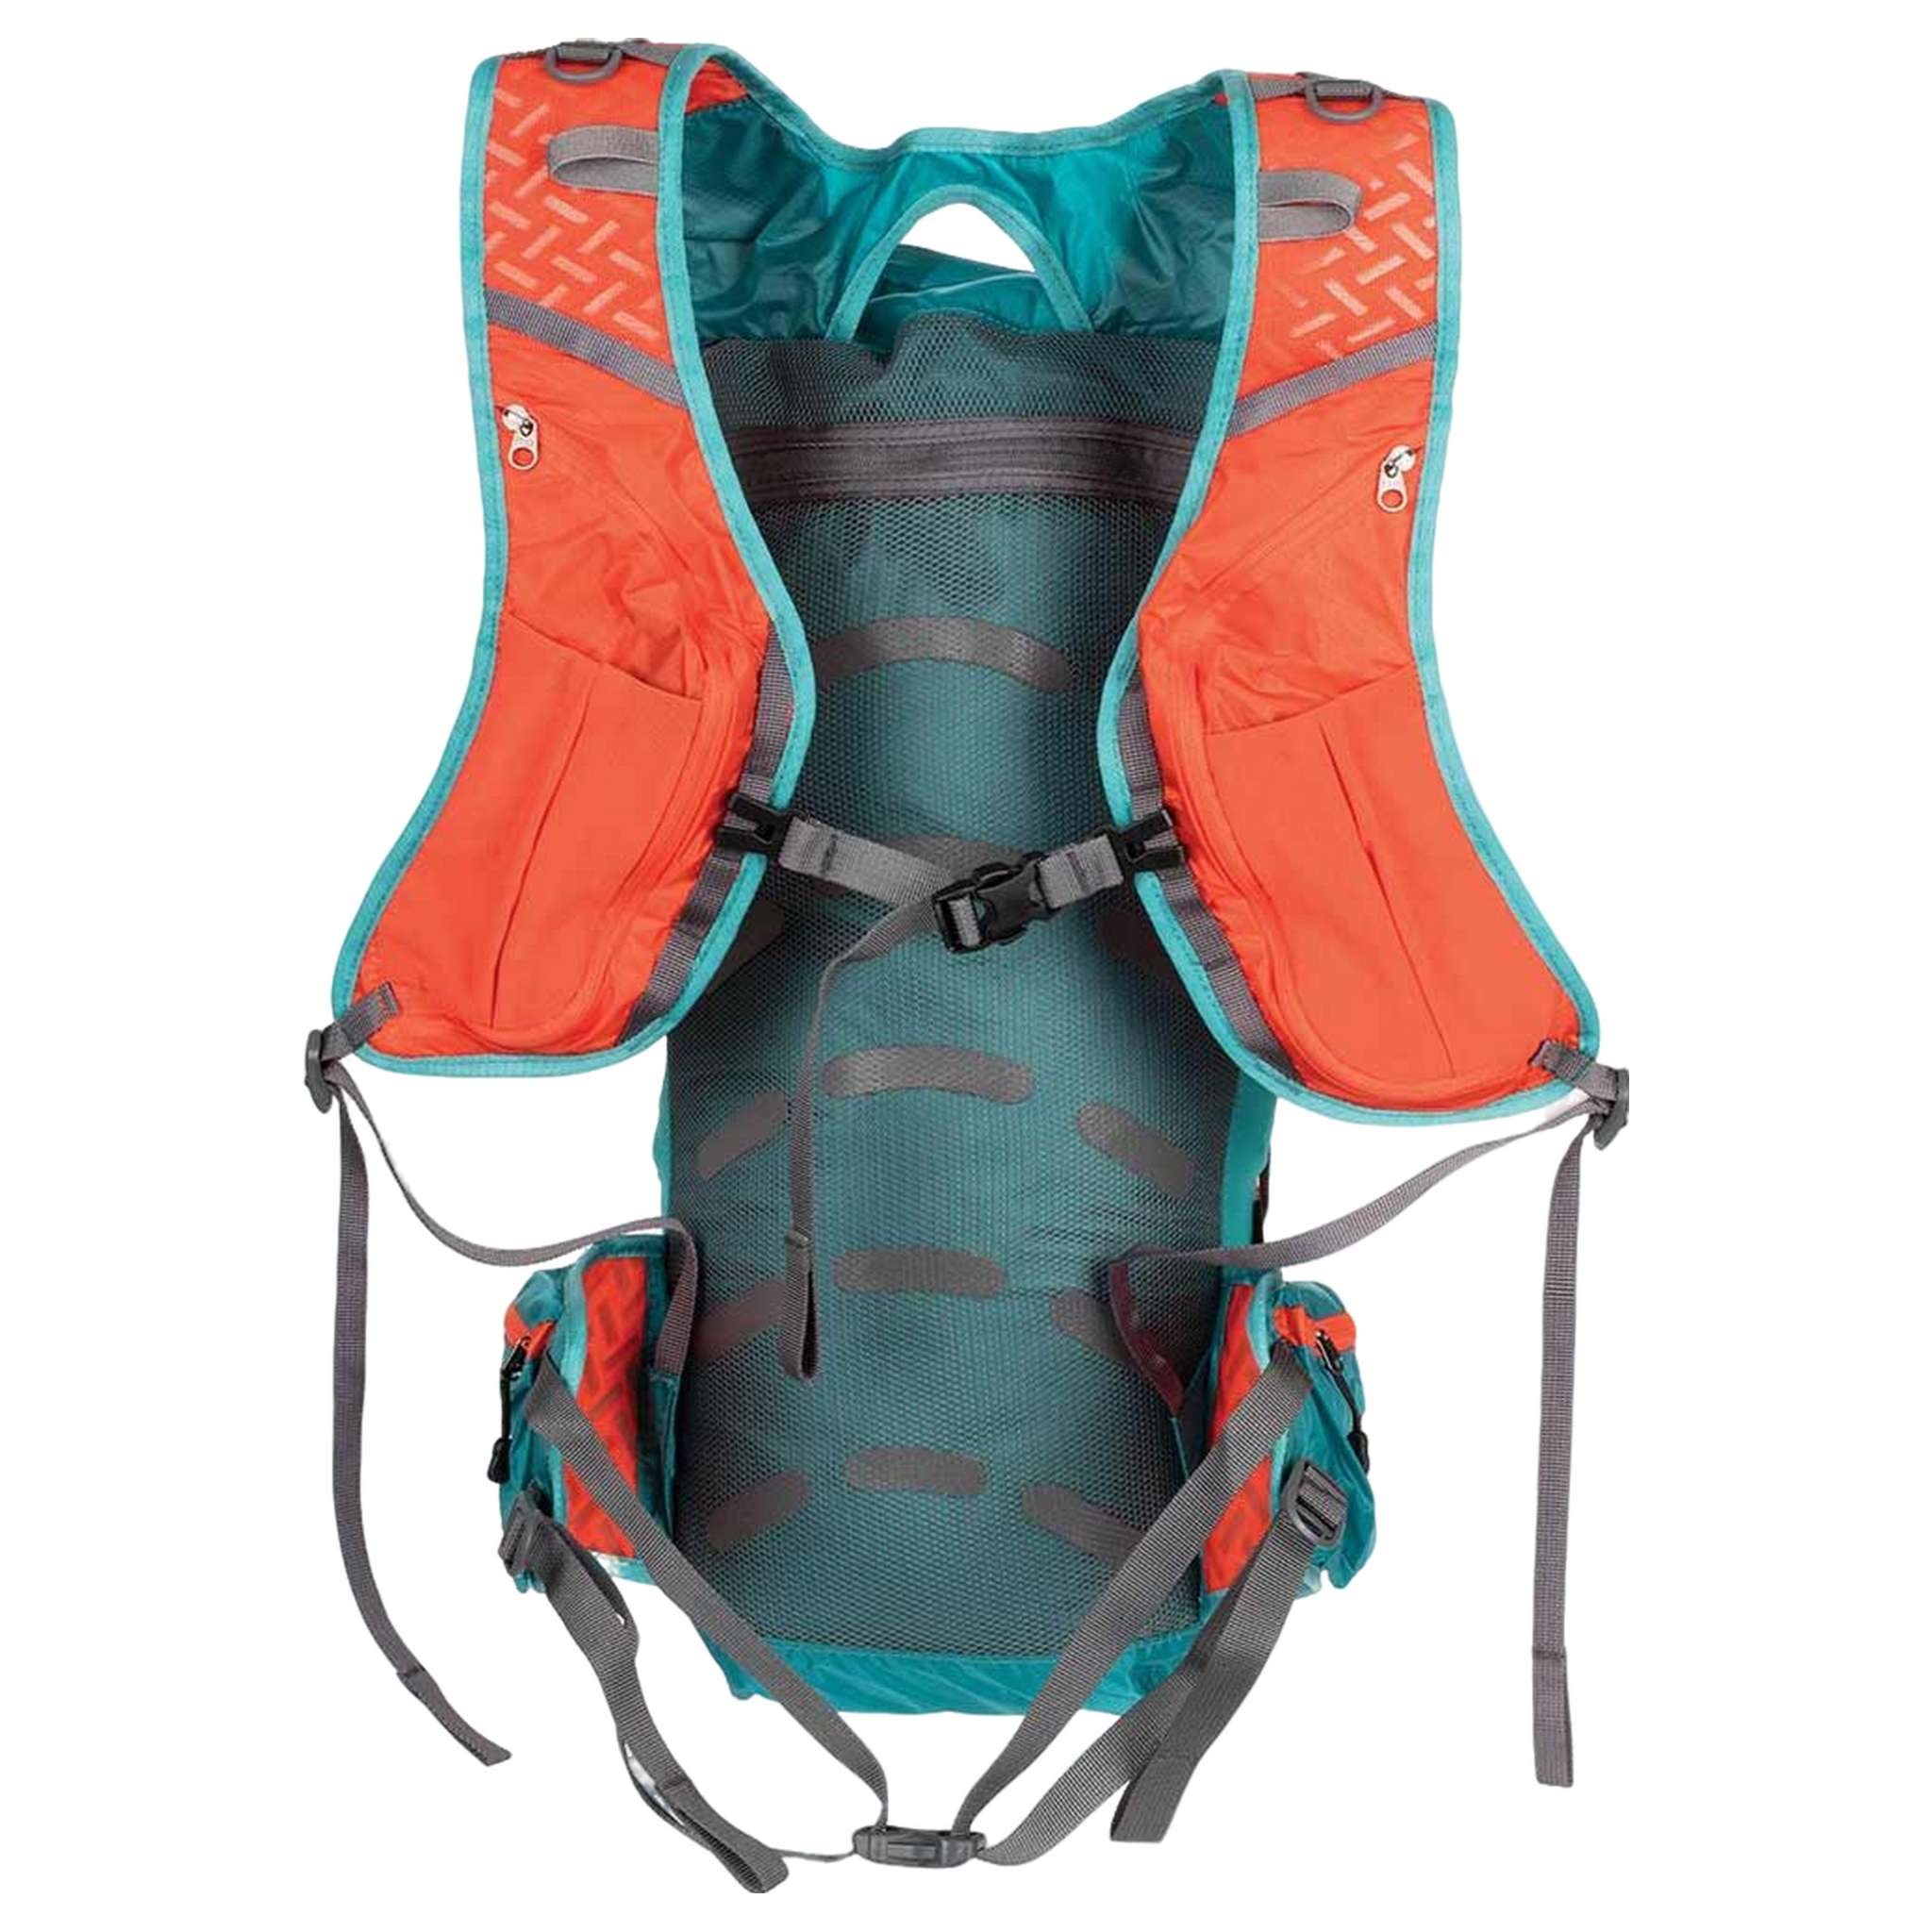 Vanga 25 UL Dry Backpack - Lightweight, Waterproof Daypack for Hiking and Trail Running